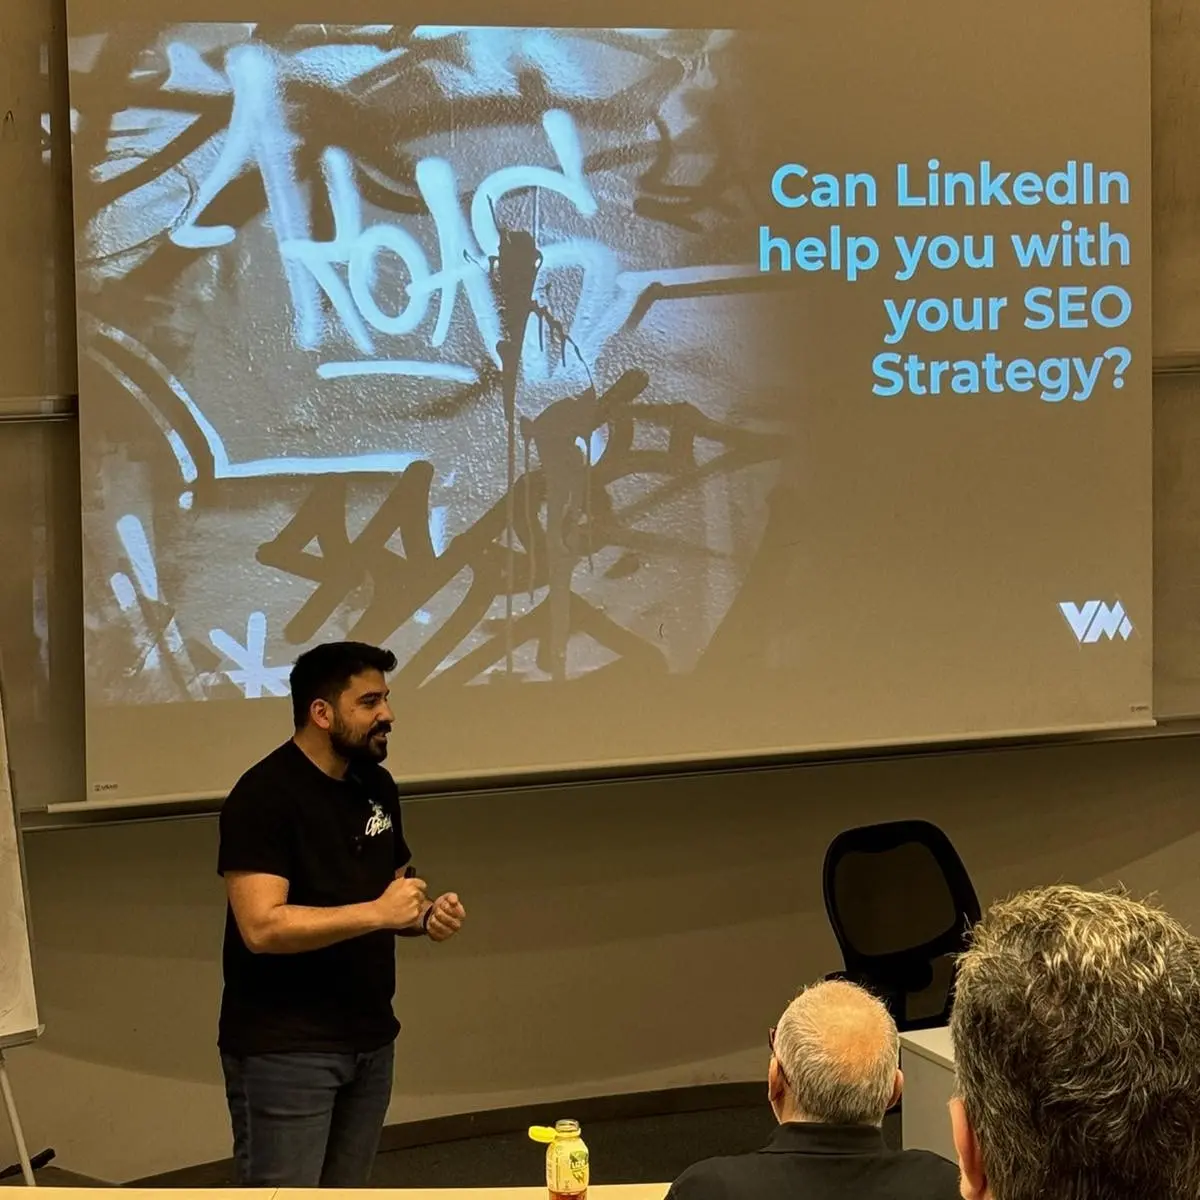 seo meetup presentation - vasileios mylonas - linkedin certified marekting expert - Can LinkedIn help you with your SEO Strategy?